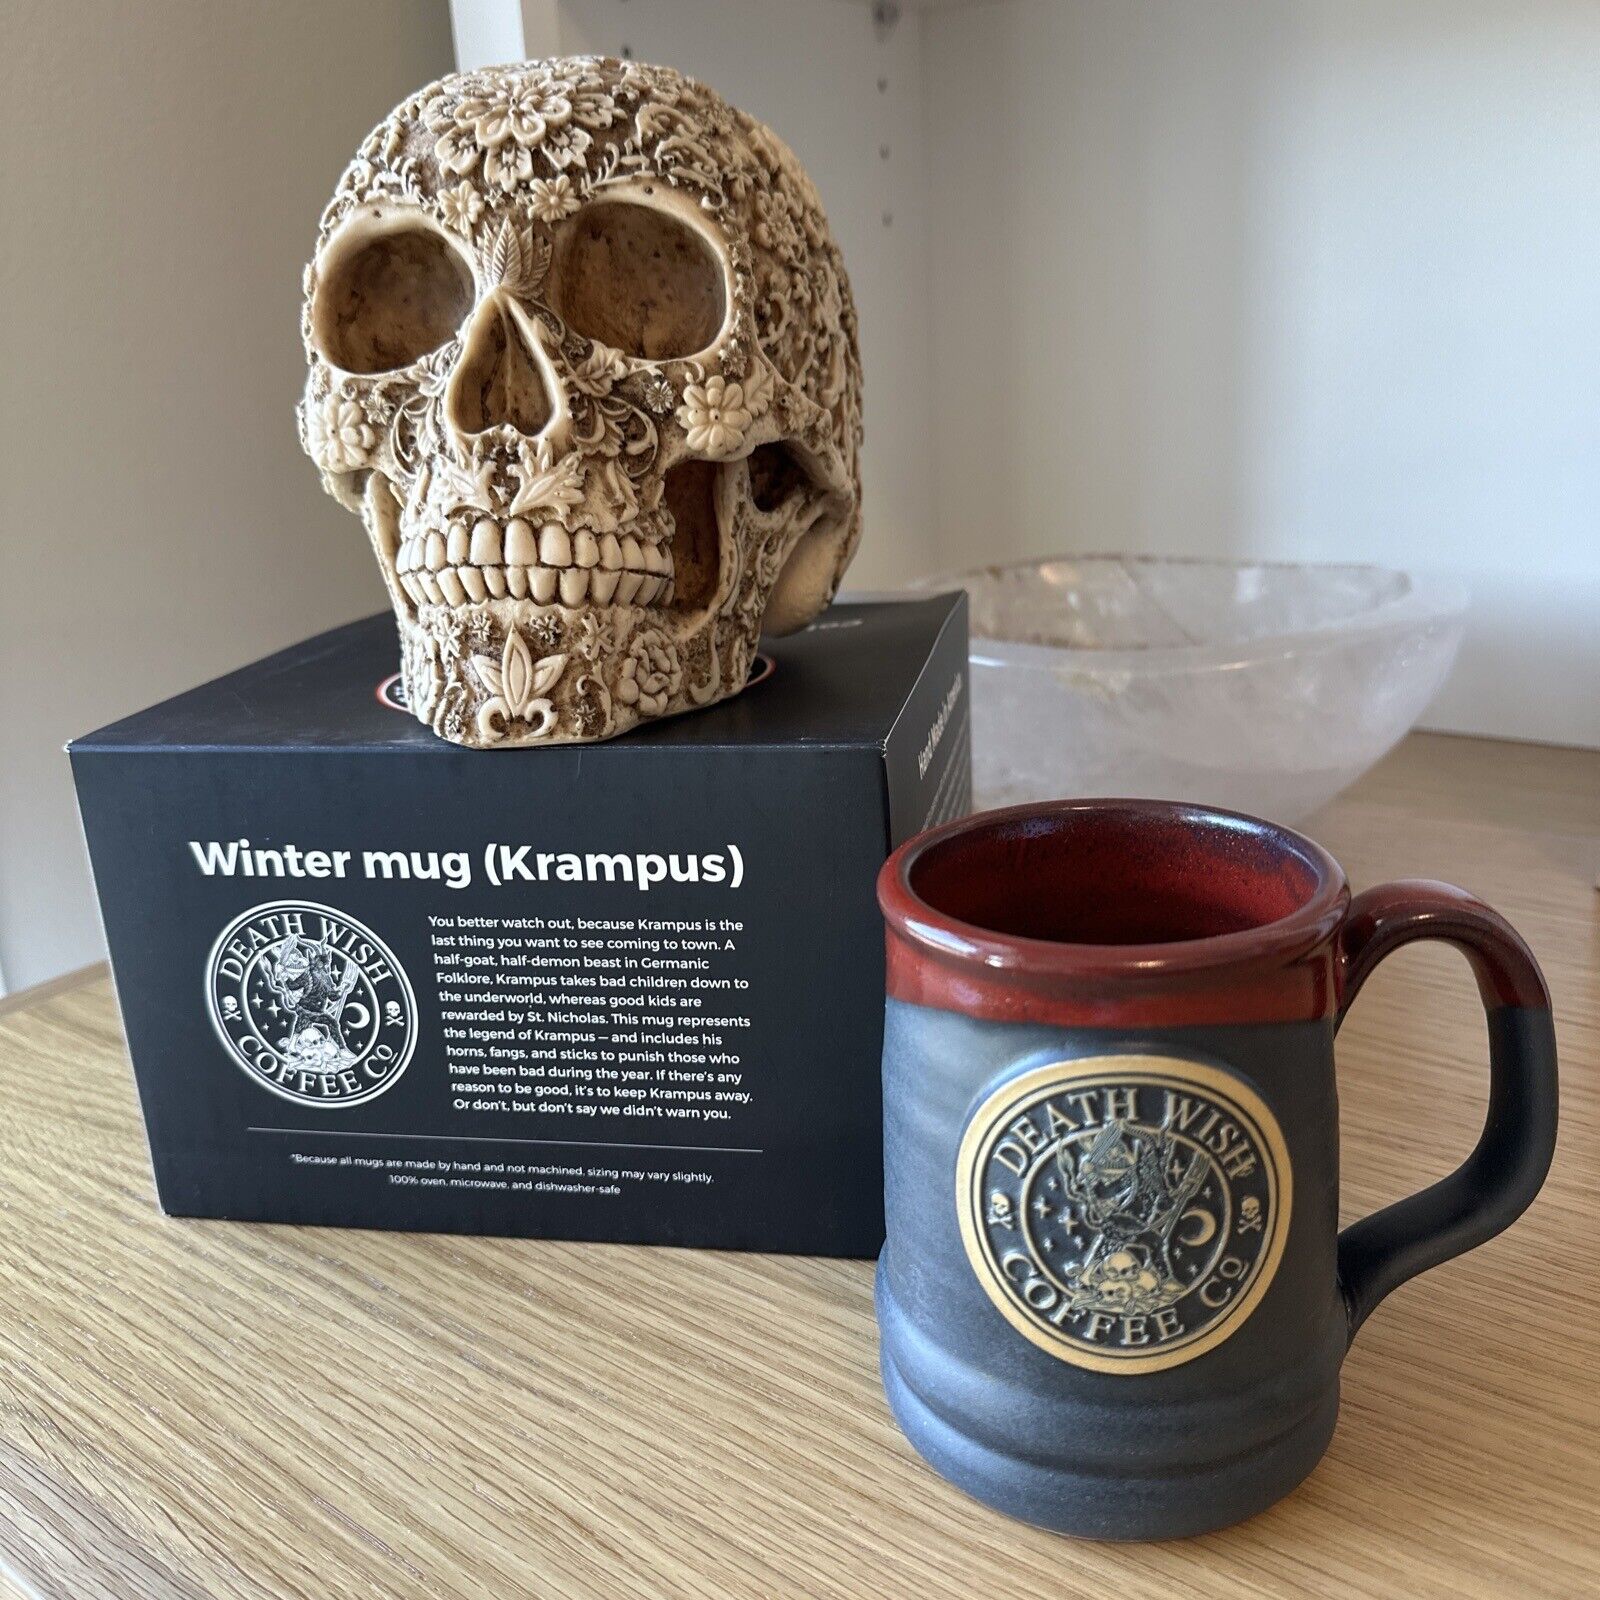 Death Wish Coffee Christmas Mug Krampus 1214/3666 - Deneen Pottery NIB From 2019